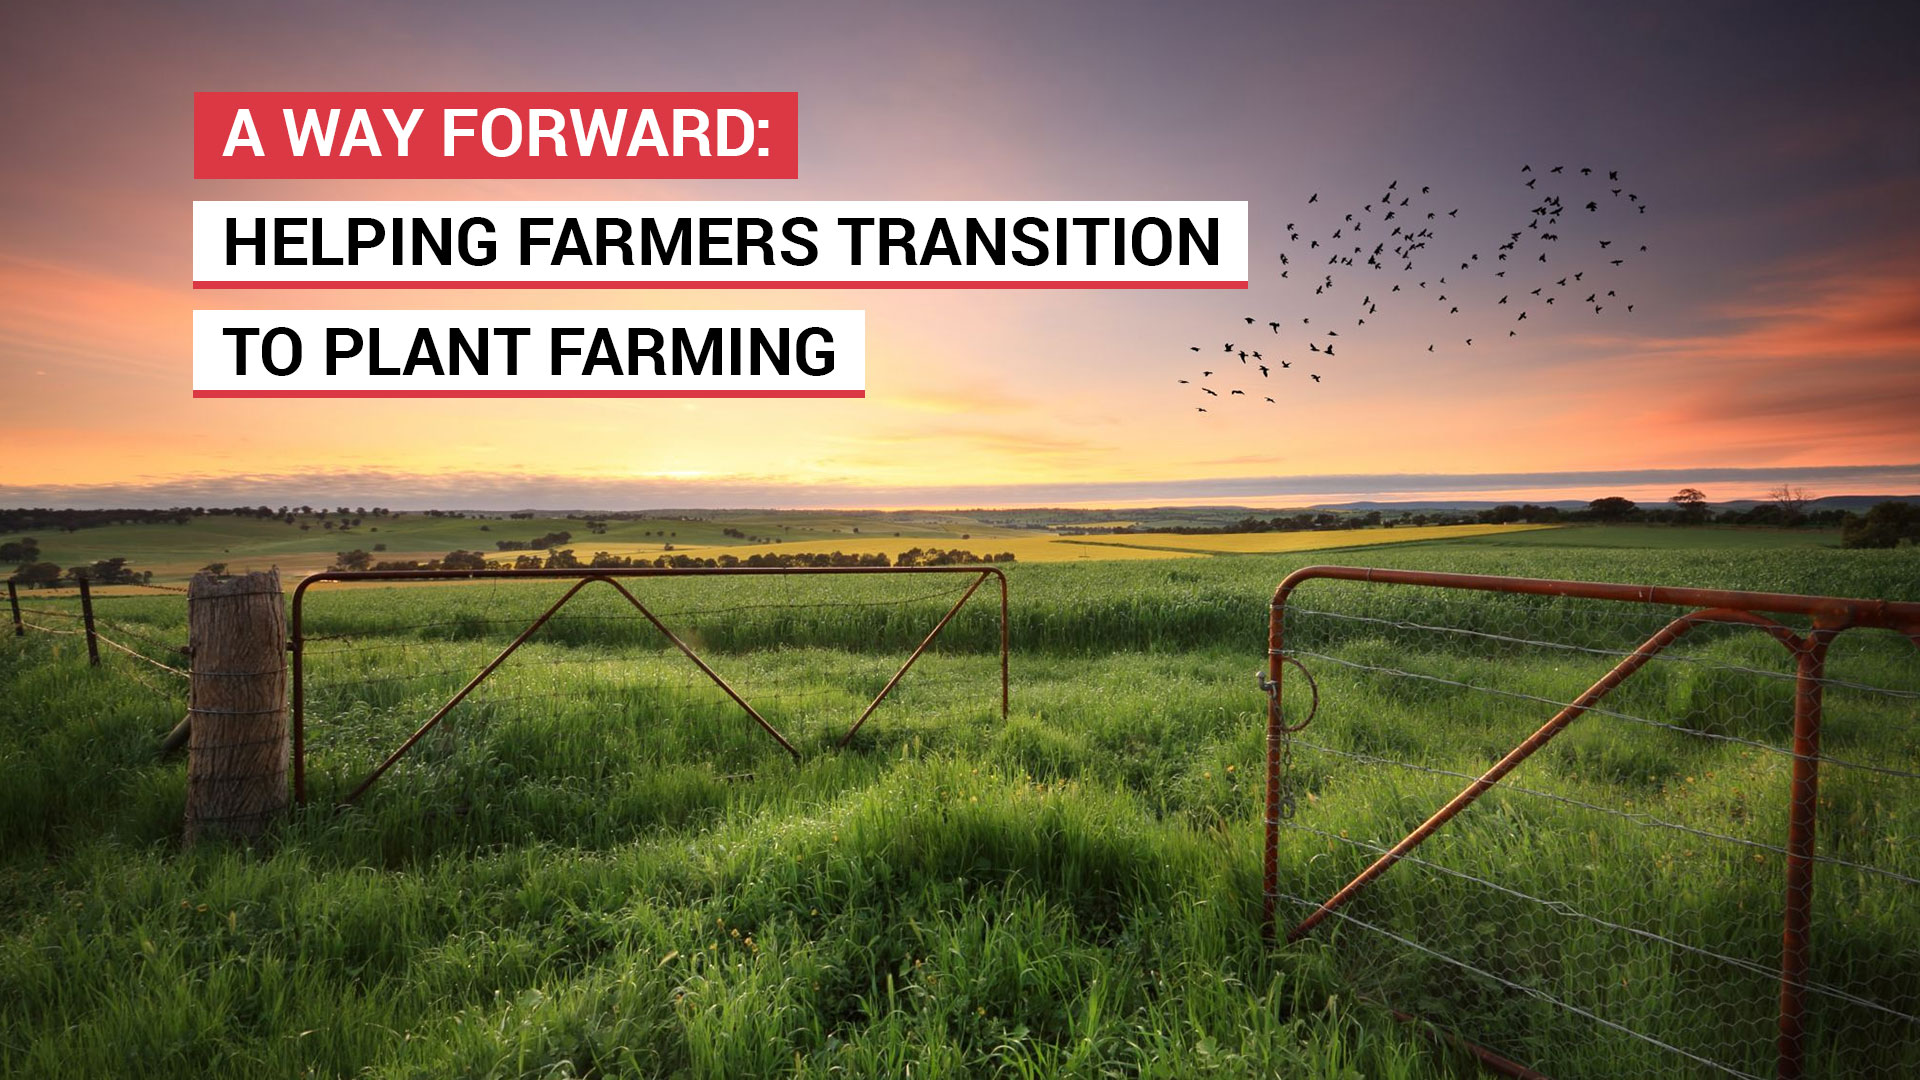 A way forward: Helping farmers transition to plant farming